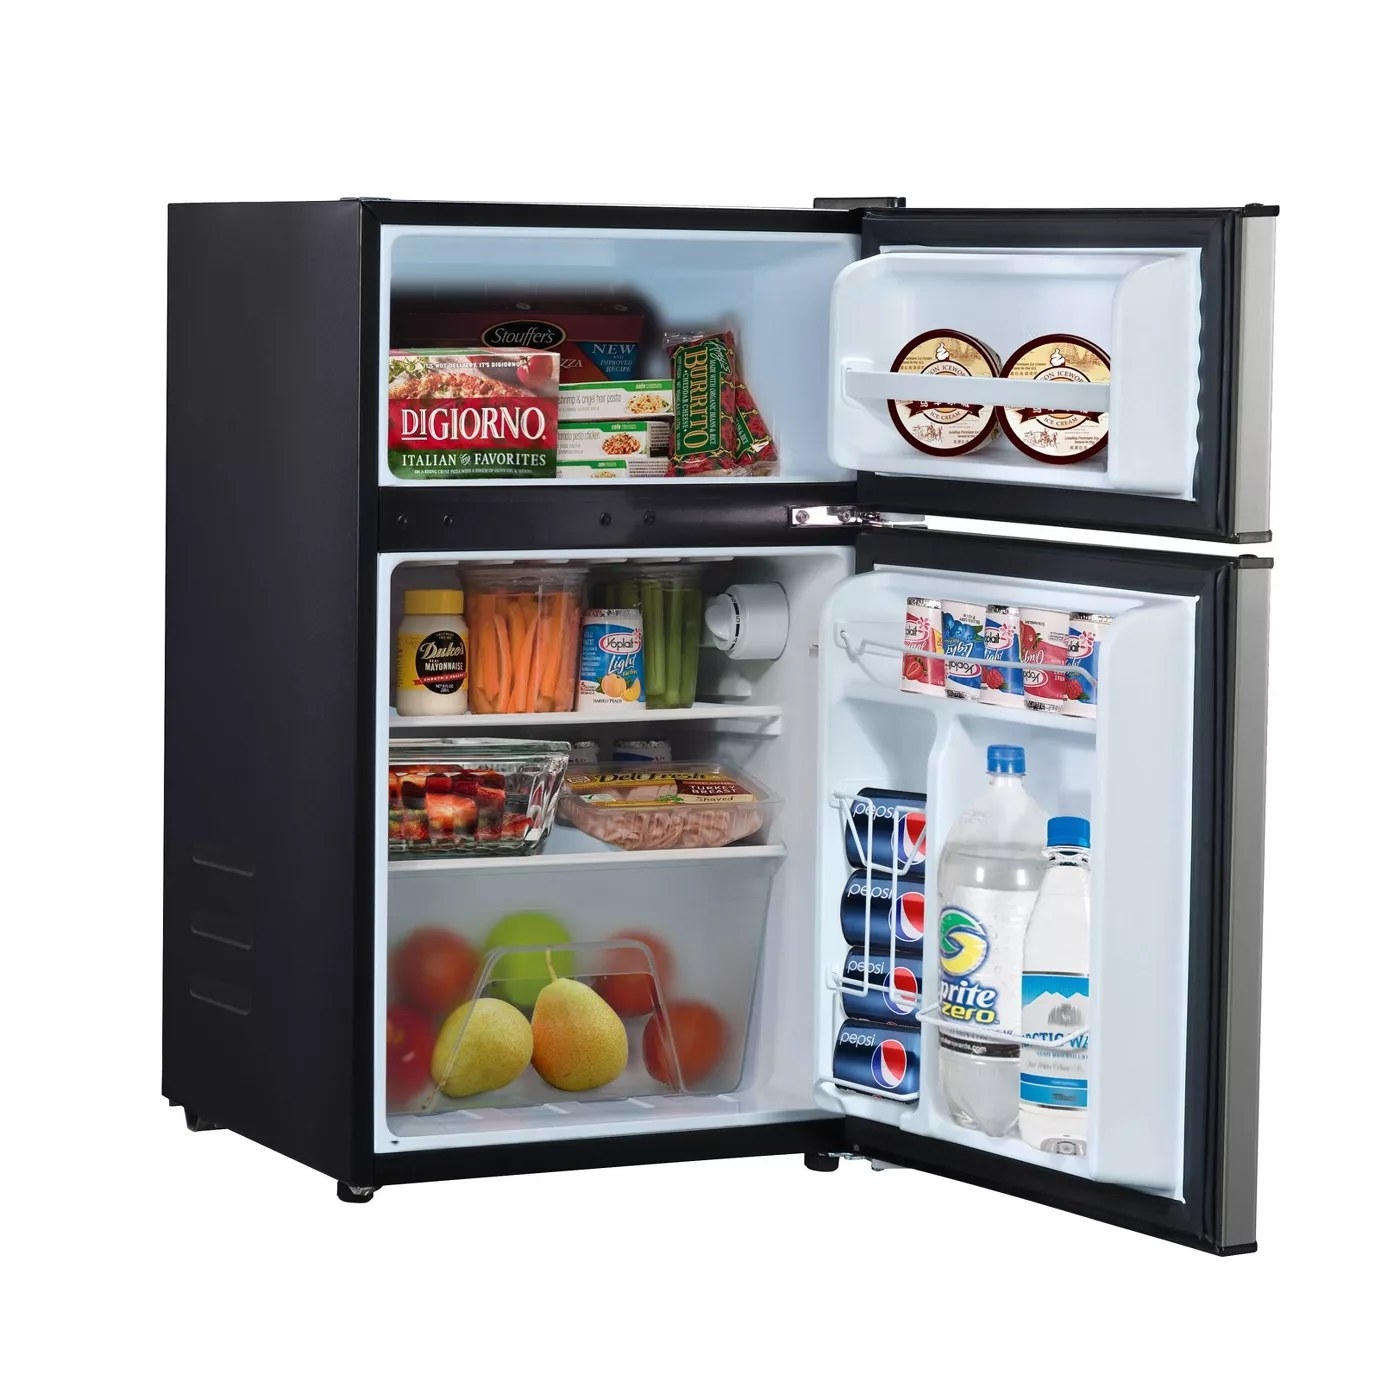 A fully stocked mini fridge